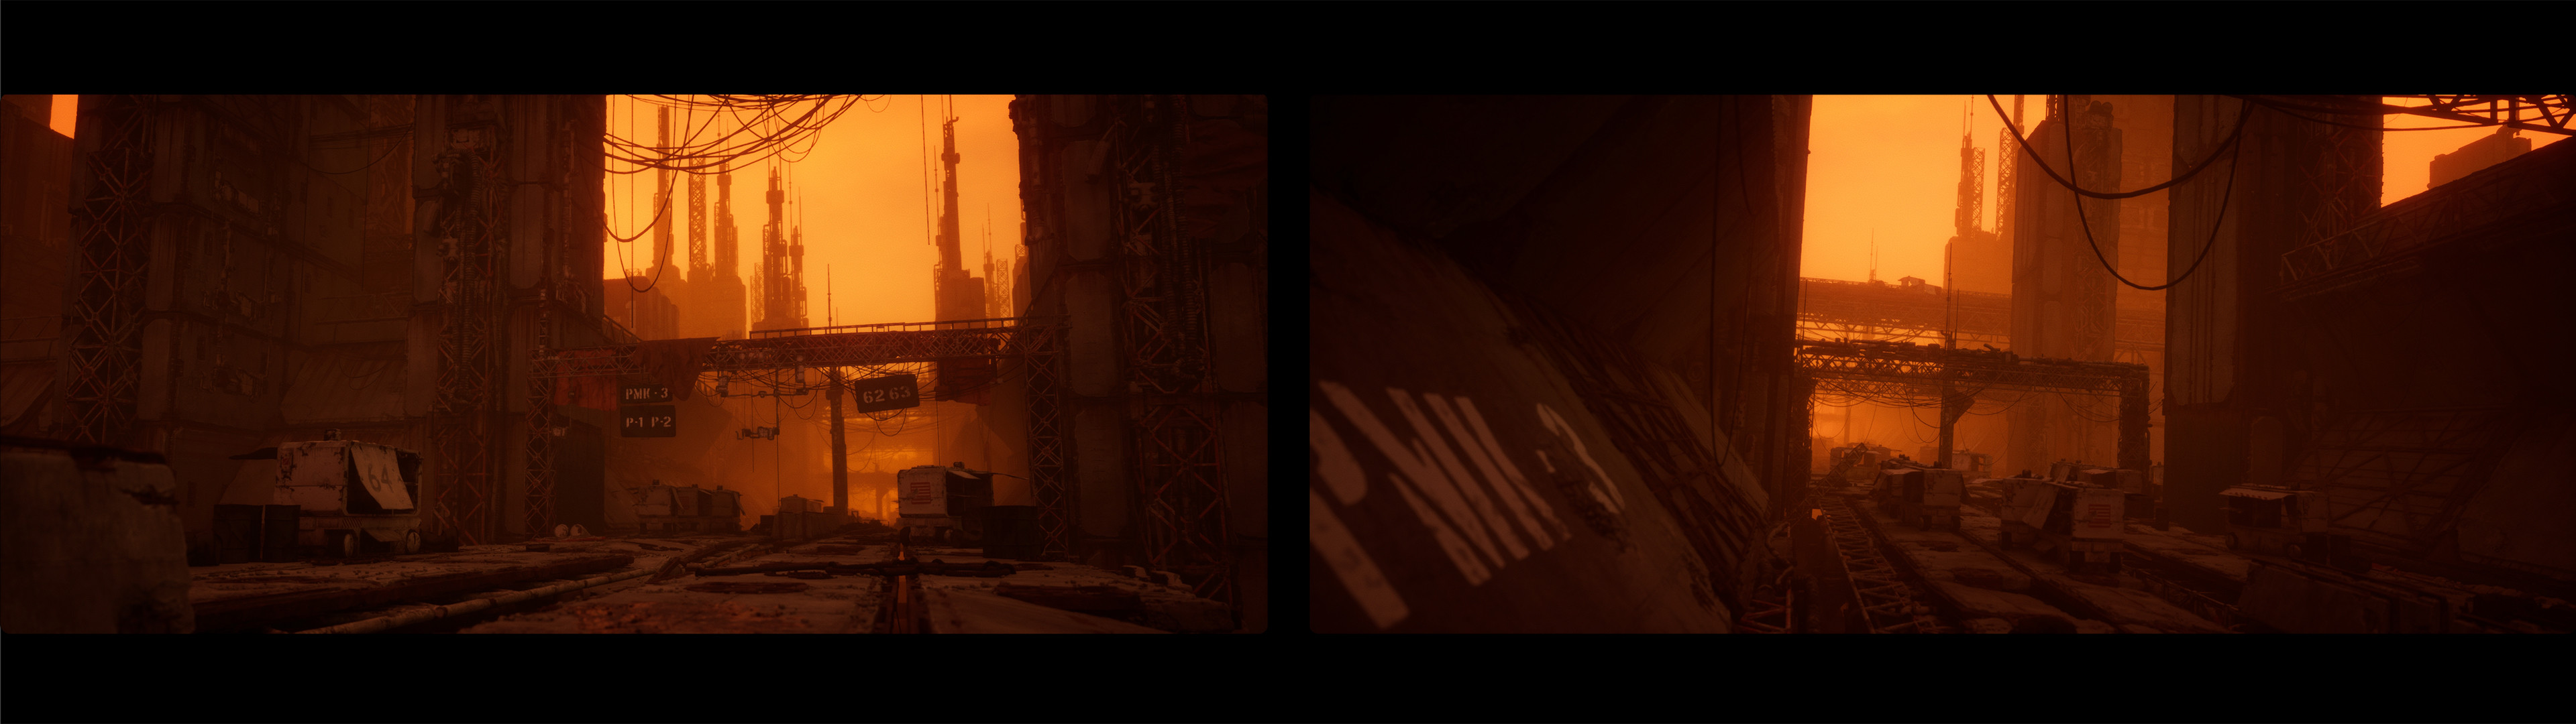 Lighting Scenario 3: 视觉参考为罗杰·狄金斯著名的《银翼杀手2049》 / Cinematography Reference from Deakins' Bladerunner 2049